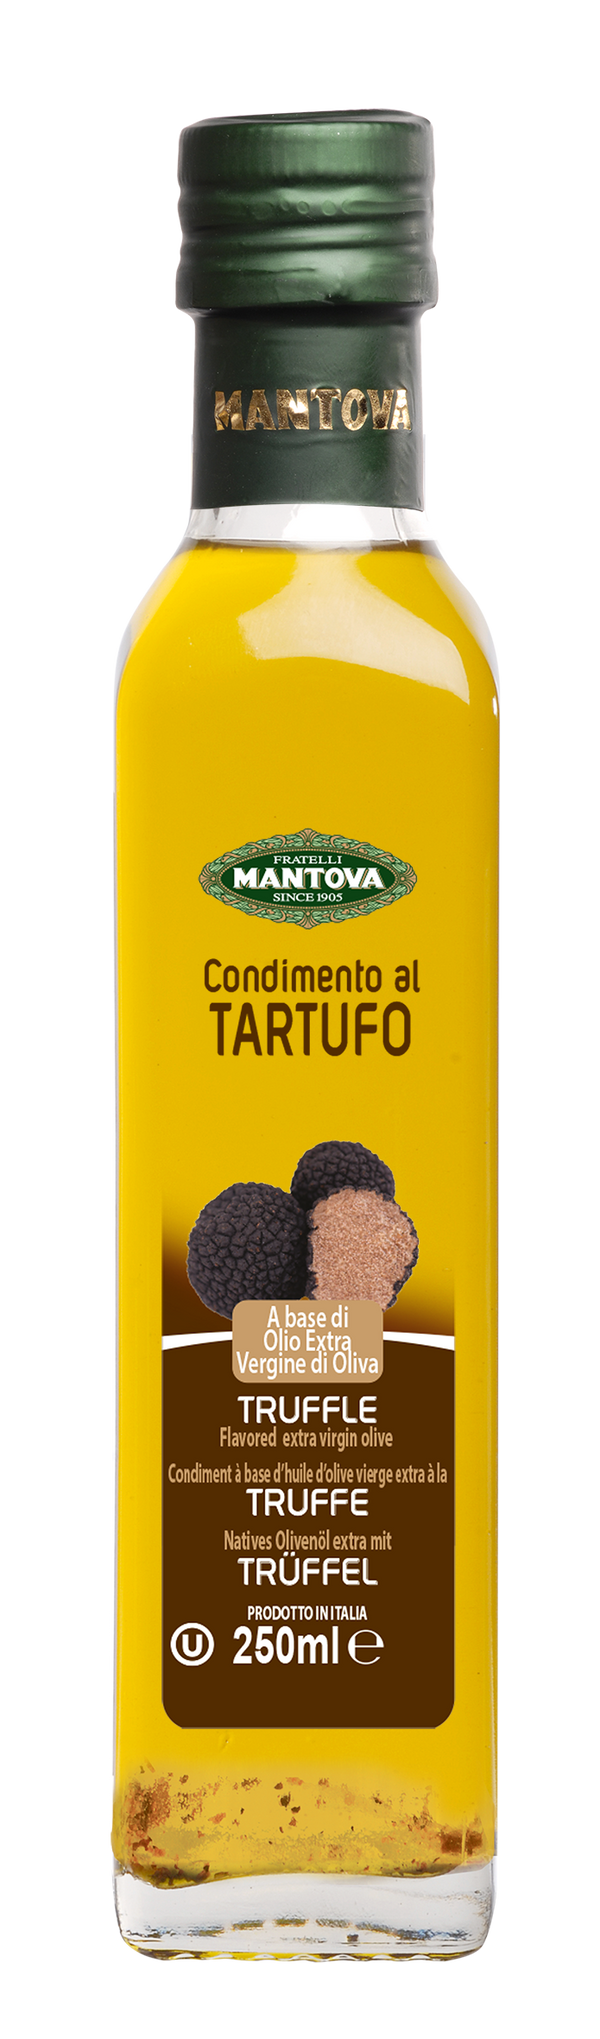 Black Truffle Flavored Extra Virgin Olive Oil Mantova 250ml